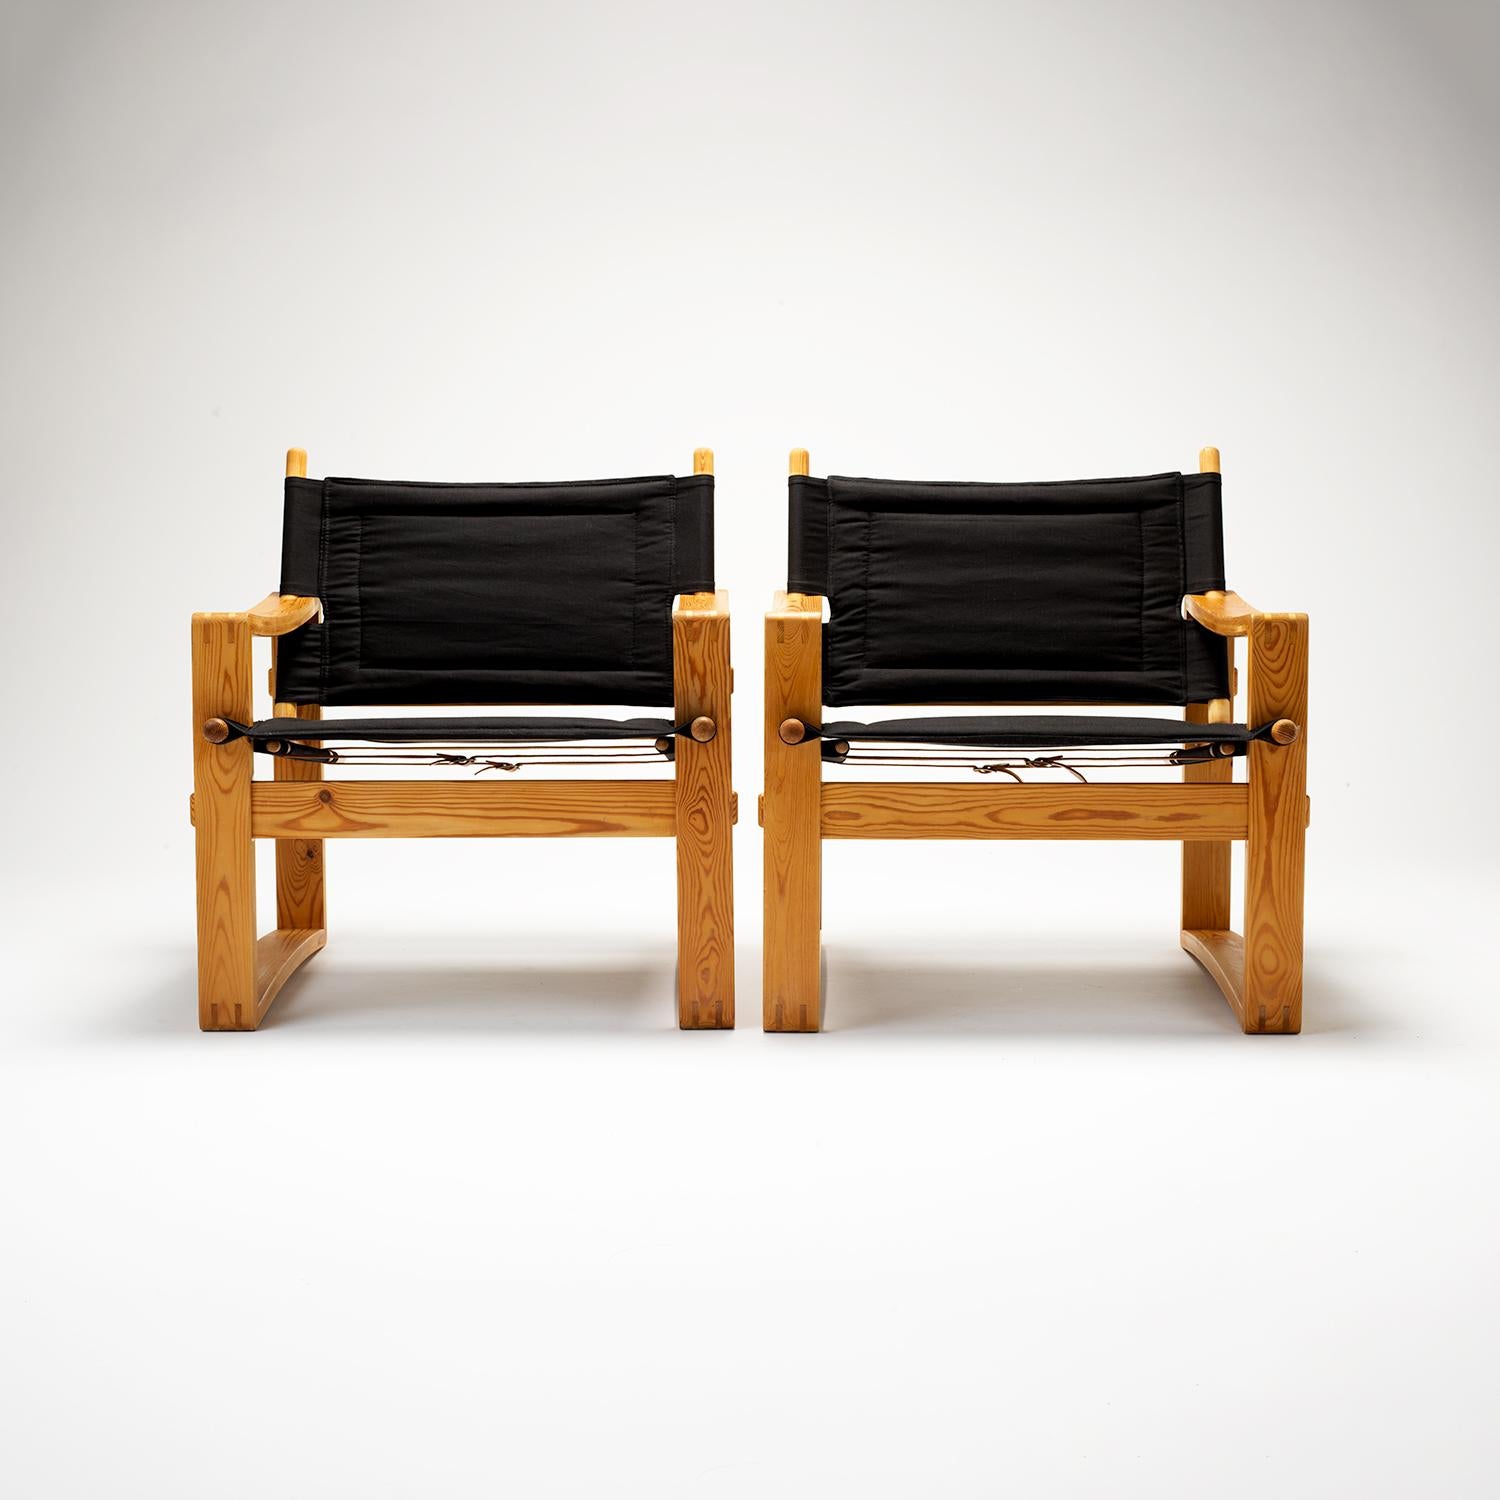 A pair of pine safari chairs designed by Børge Jensen for Bernstorffsminde Møbelfabrik, Denmark. New black canvas upholstery. Excellent vintage condition.

